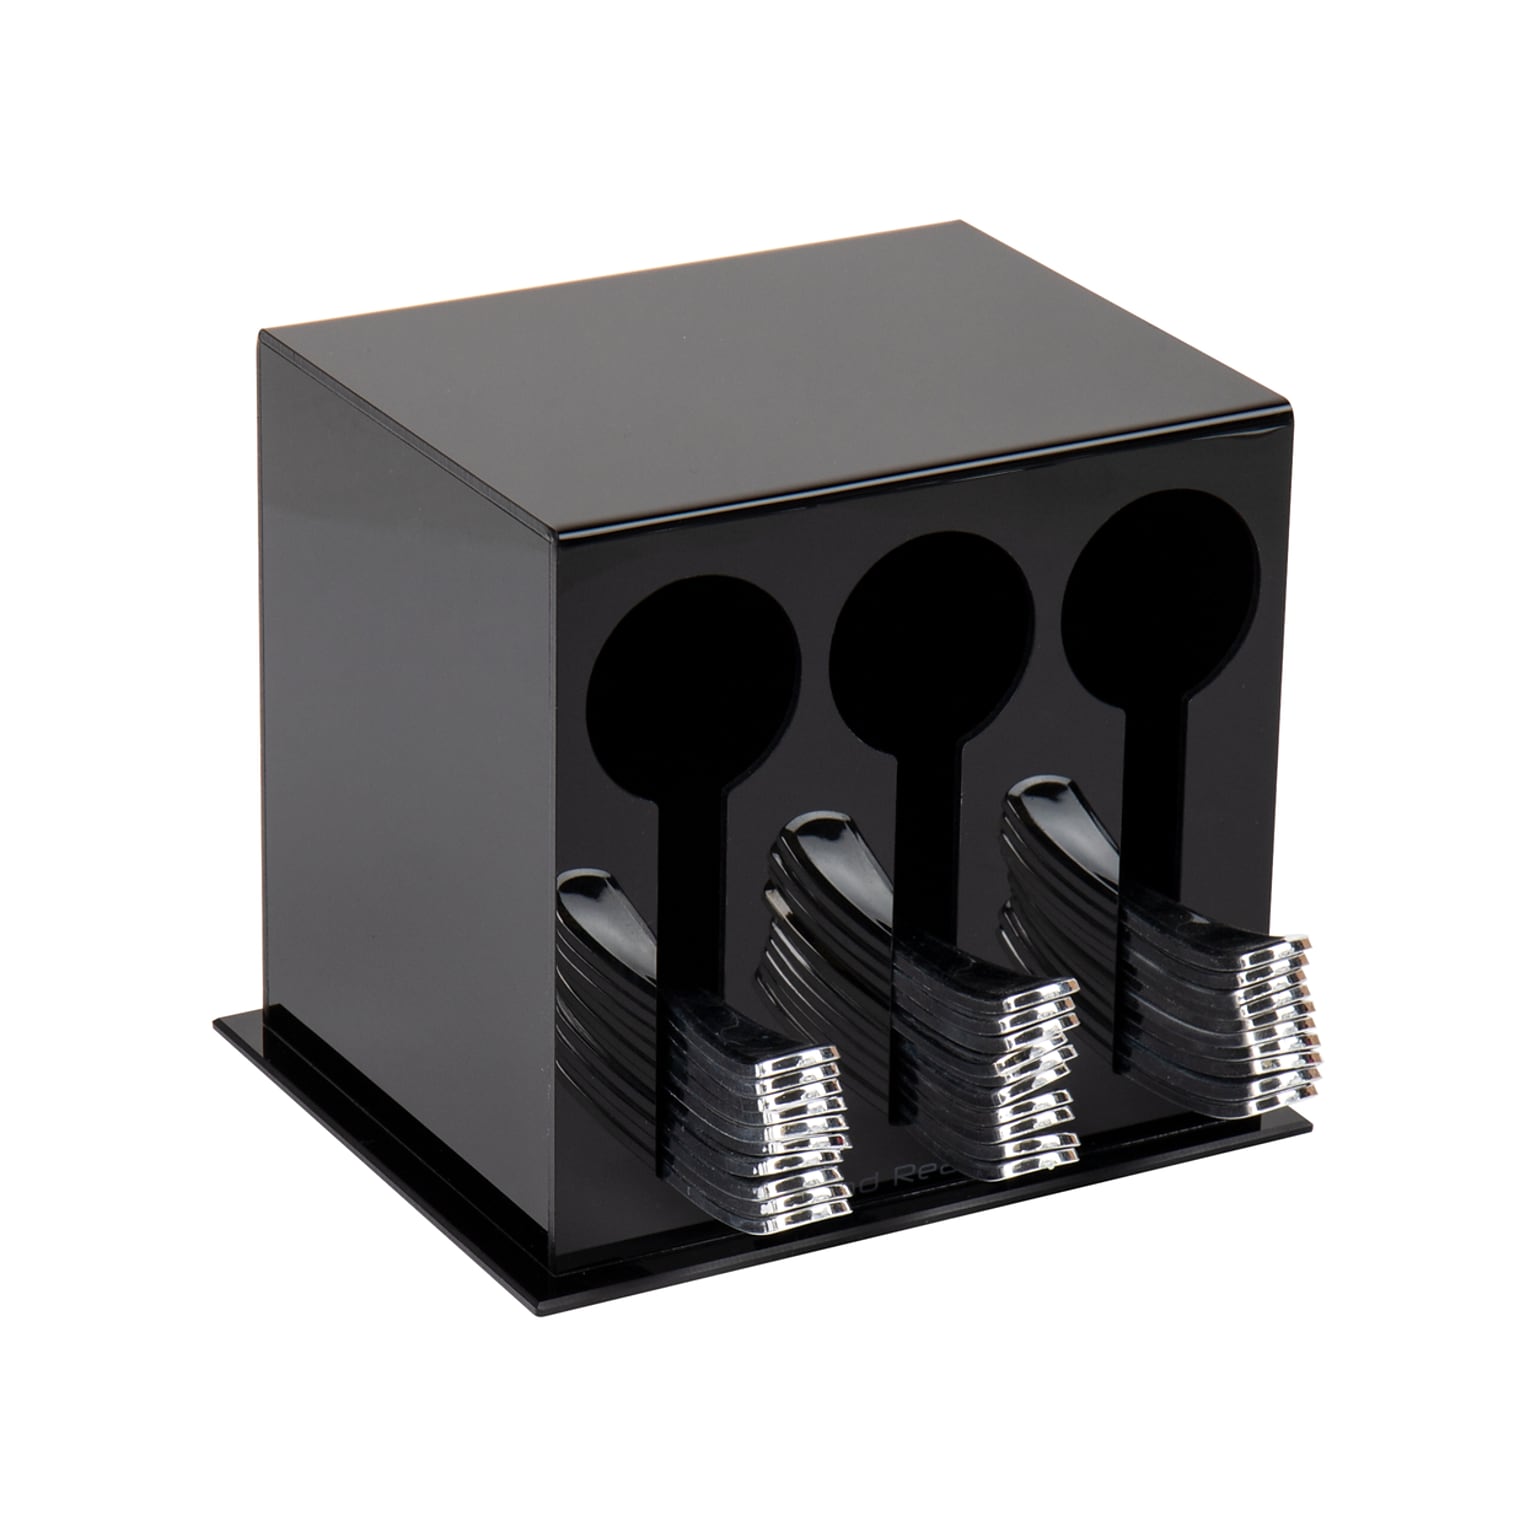 Mind Reader Plastic 3-Compartment Utensil Dispenser Silverware Organizer, Black (3CSTOR-BLK)